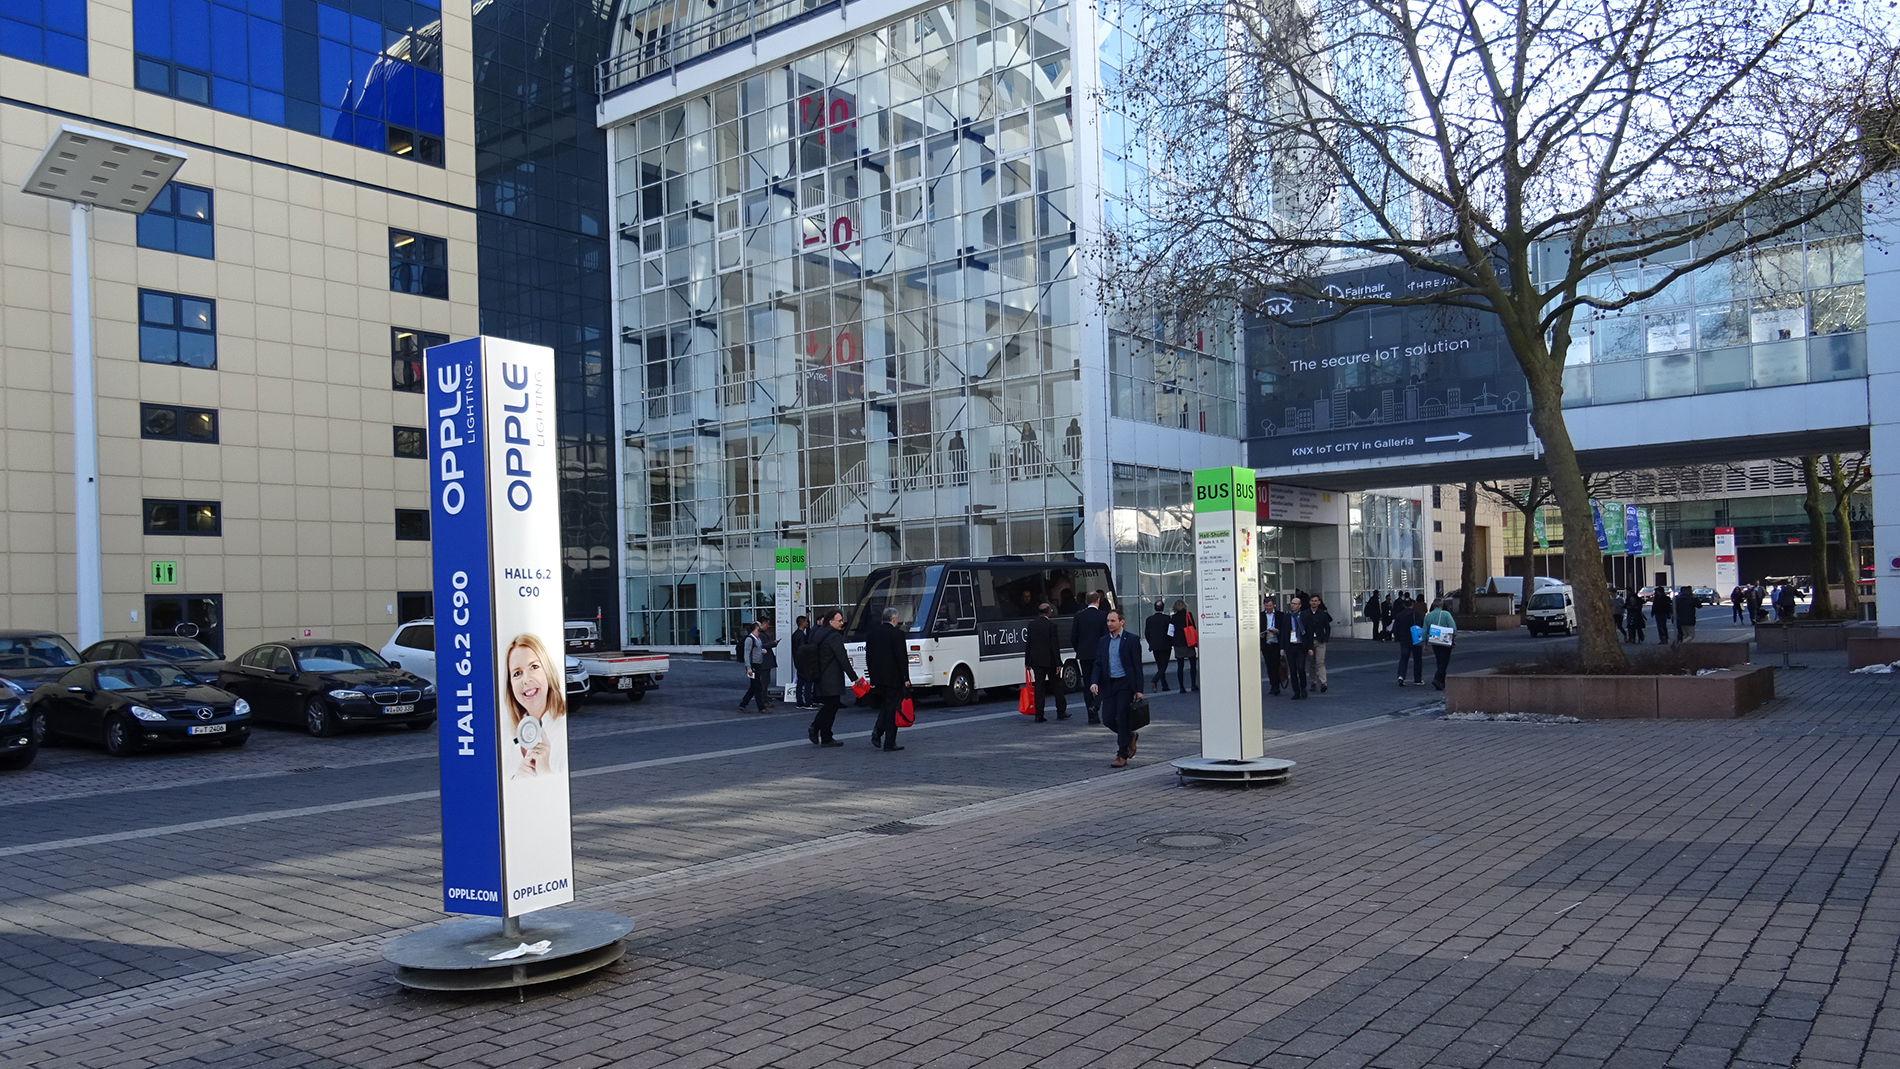 Bus stop pylon at Messe Frankfurt